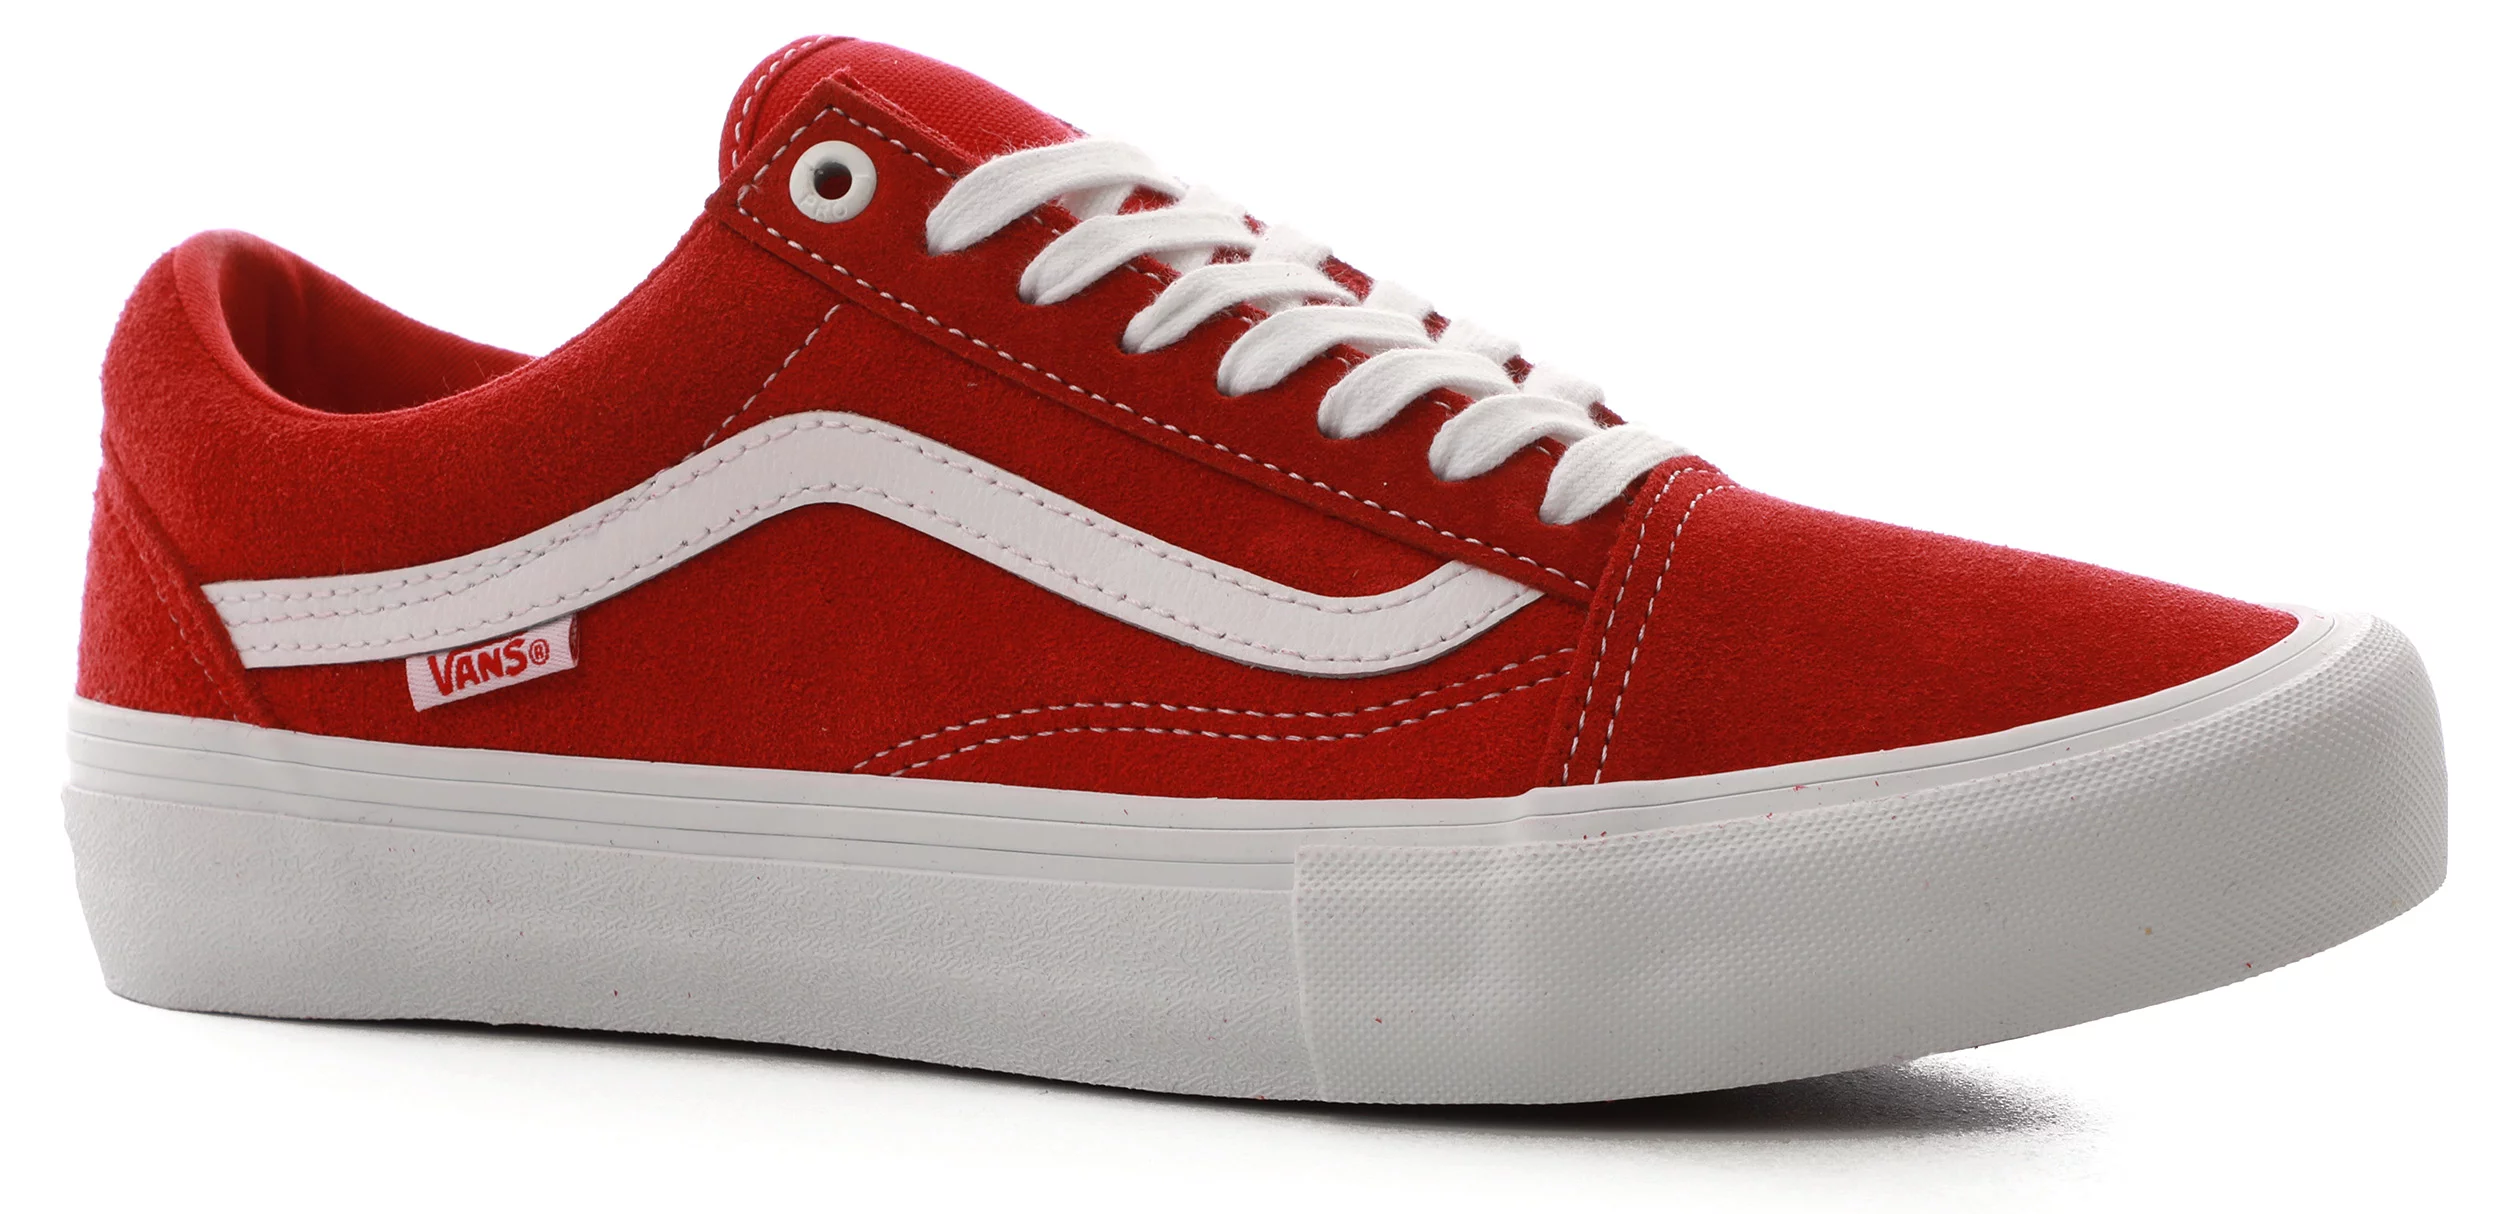 Vans Old Skool Pro Skate Shoes - red/white | Tactics